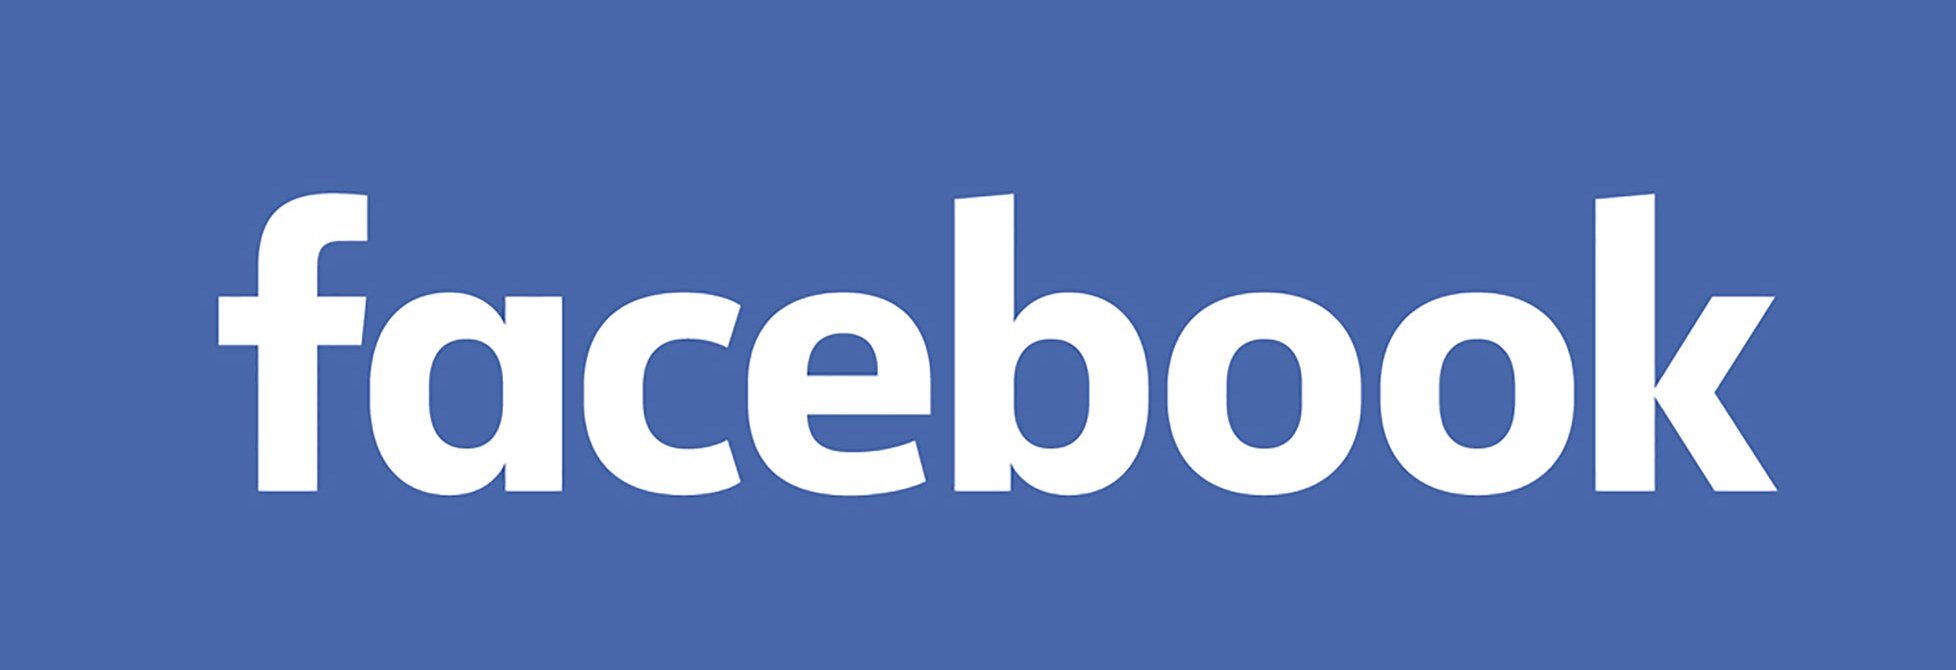 Neues-Facebook-Logo.jpg